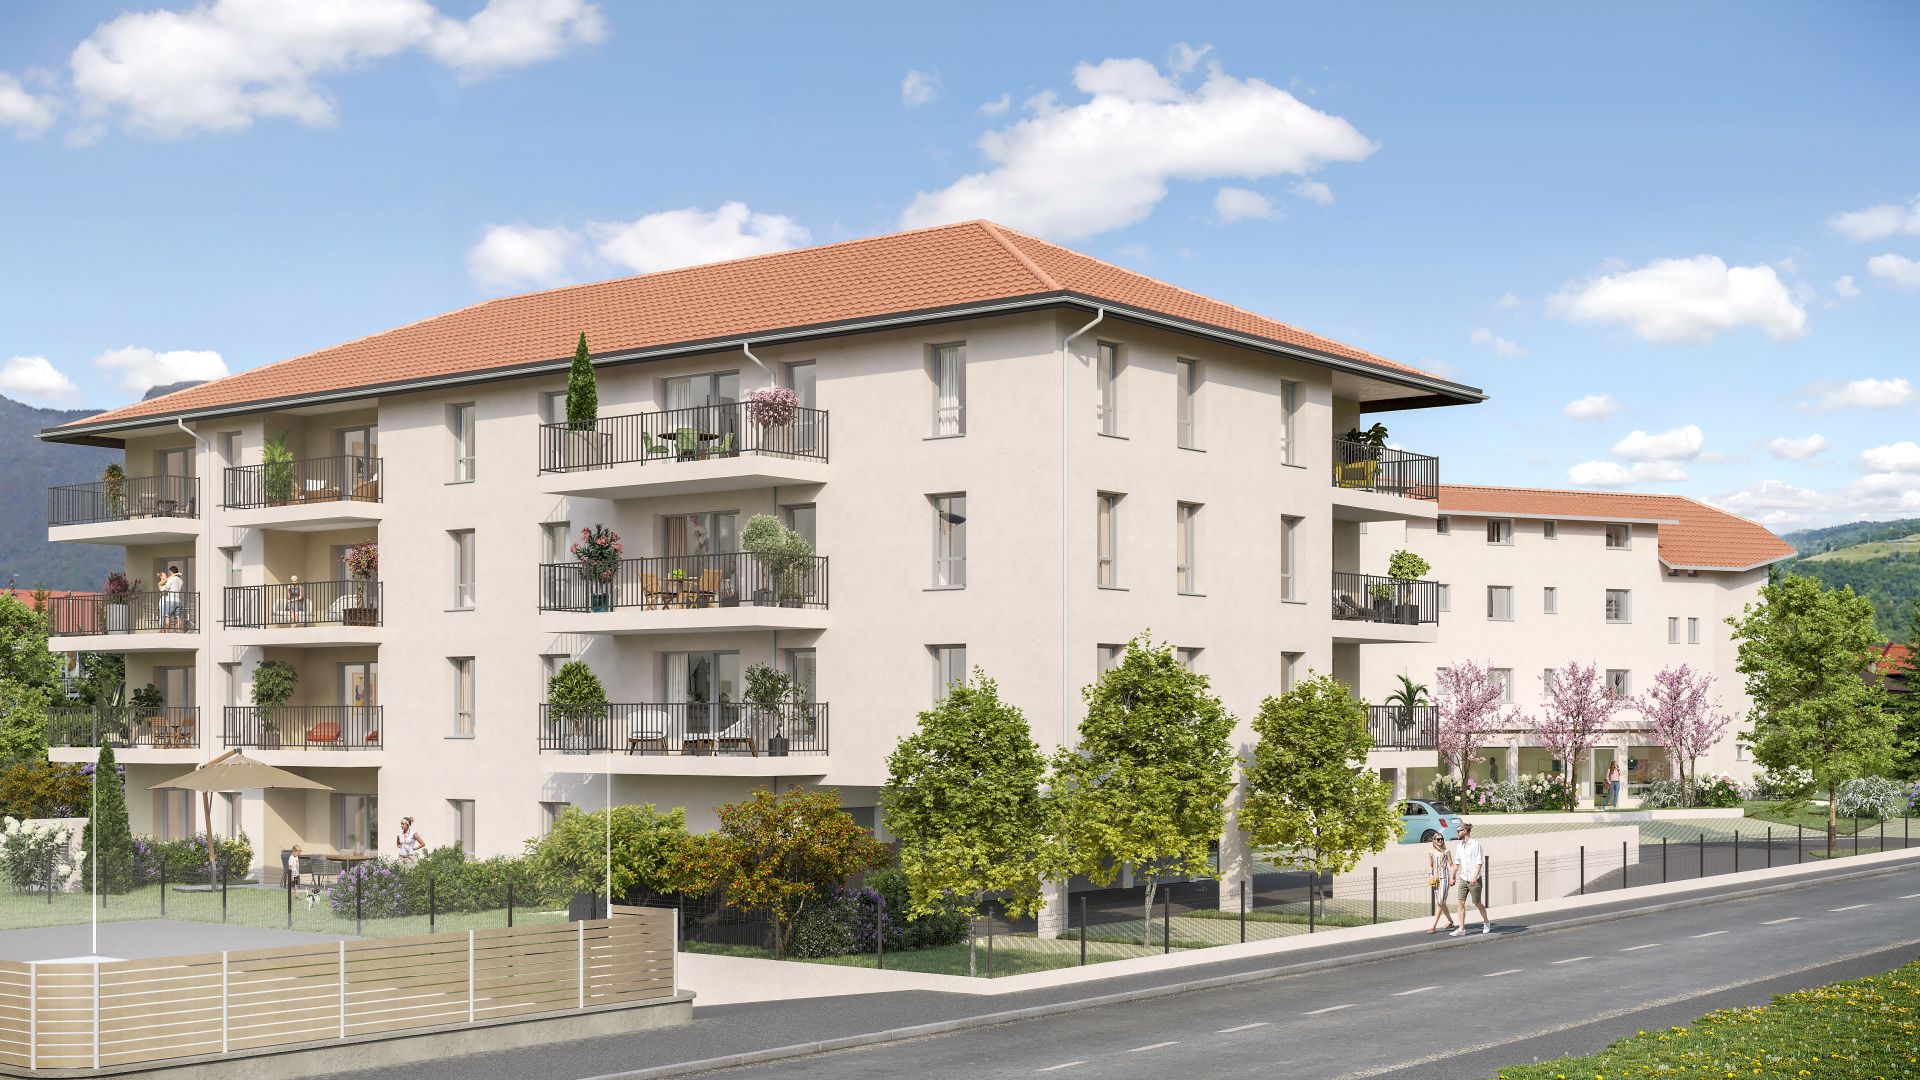 Greencity immobilier - achat appartements neufs du T2 au T3 - Résidence Le Montarly - Albertville 73200